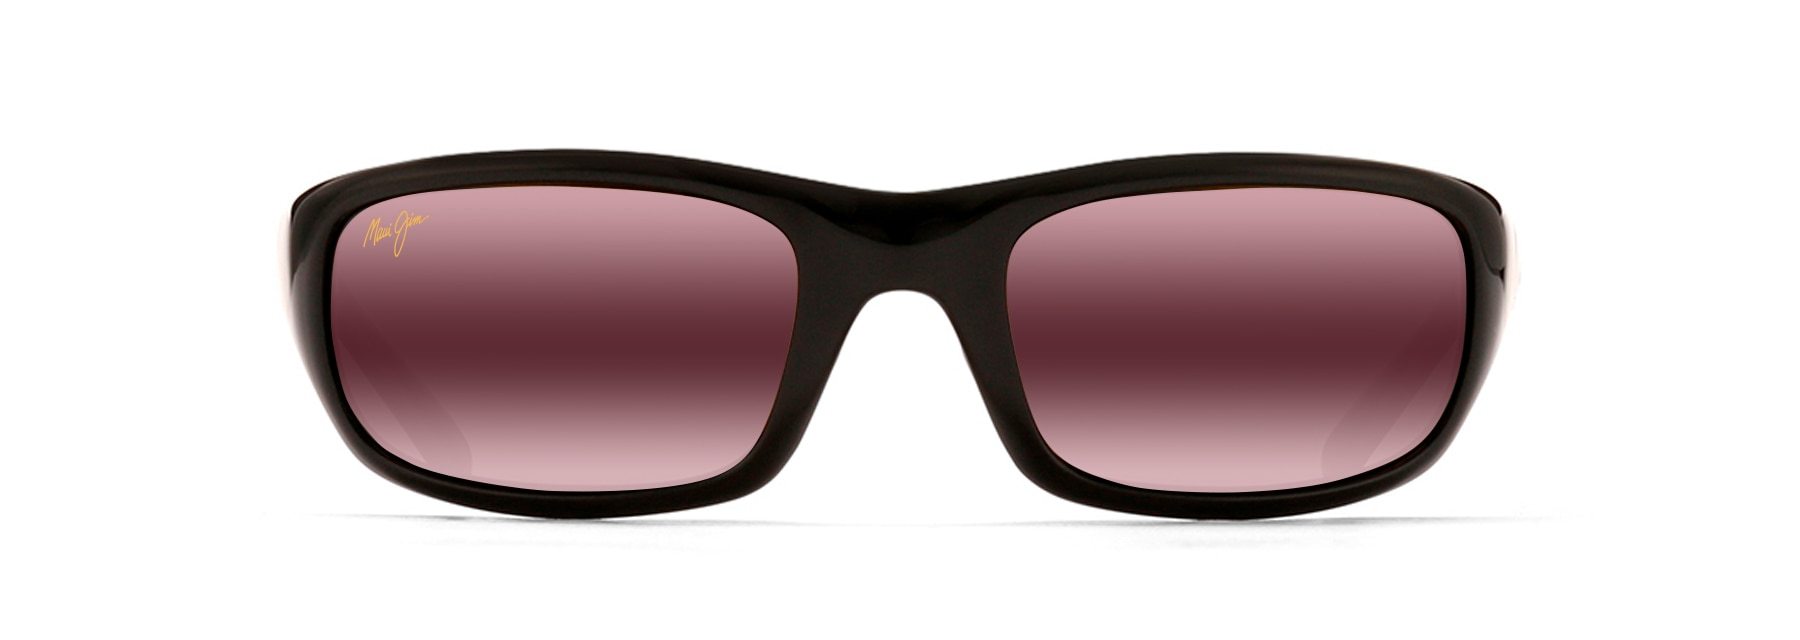 MyMaui Stingray MM103-004 Sunglasses